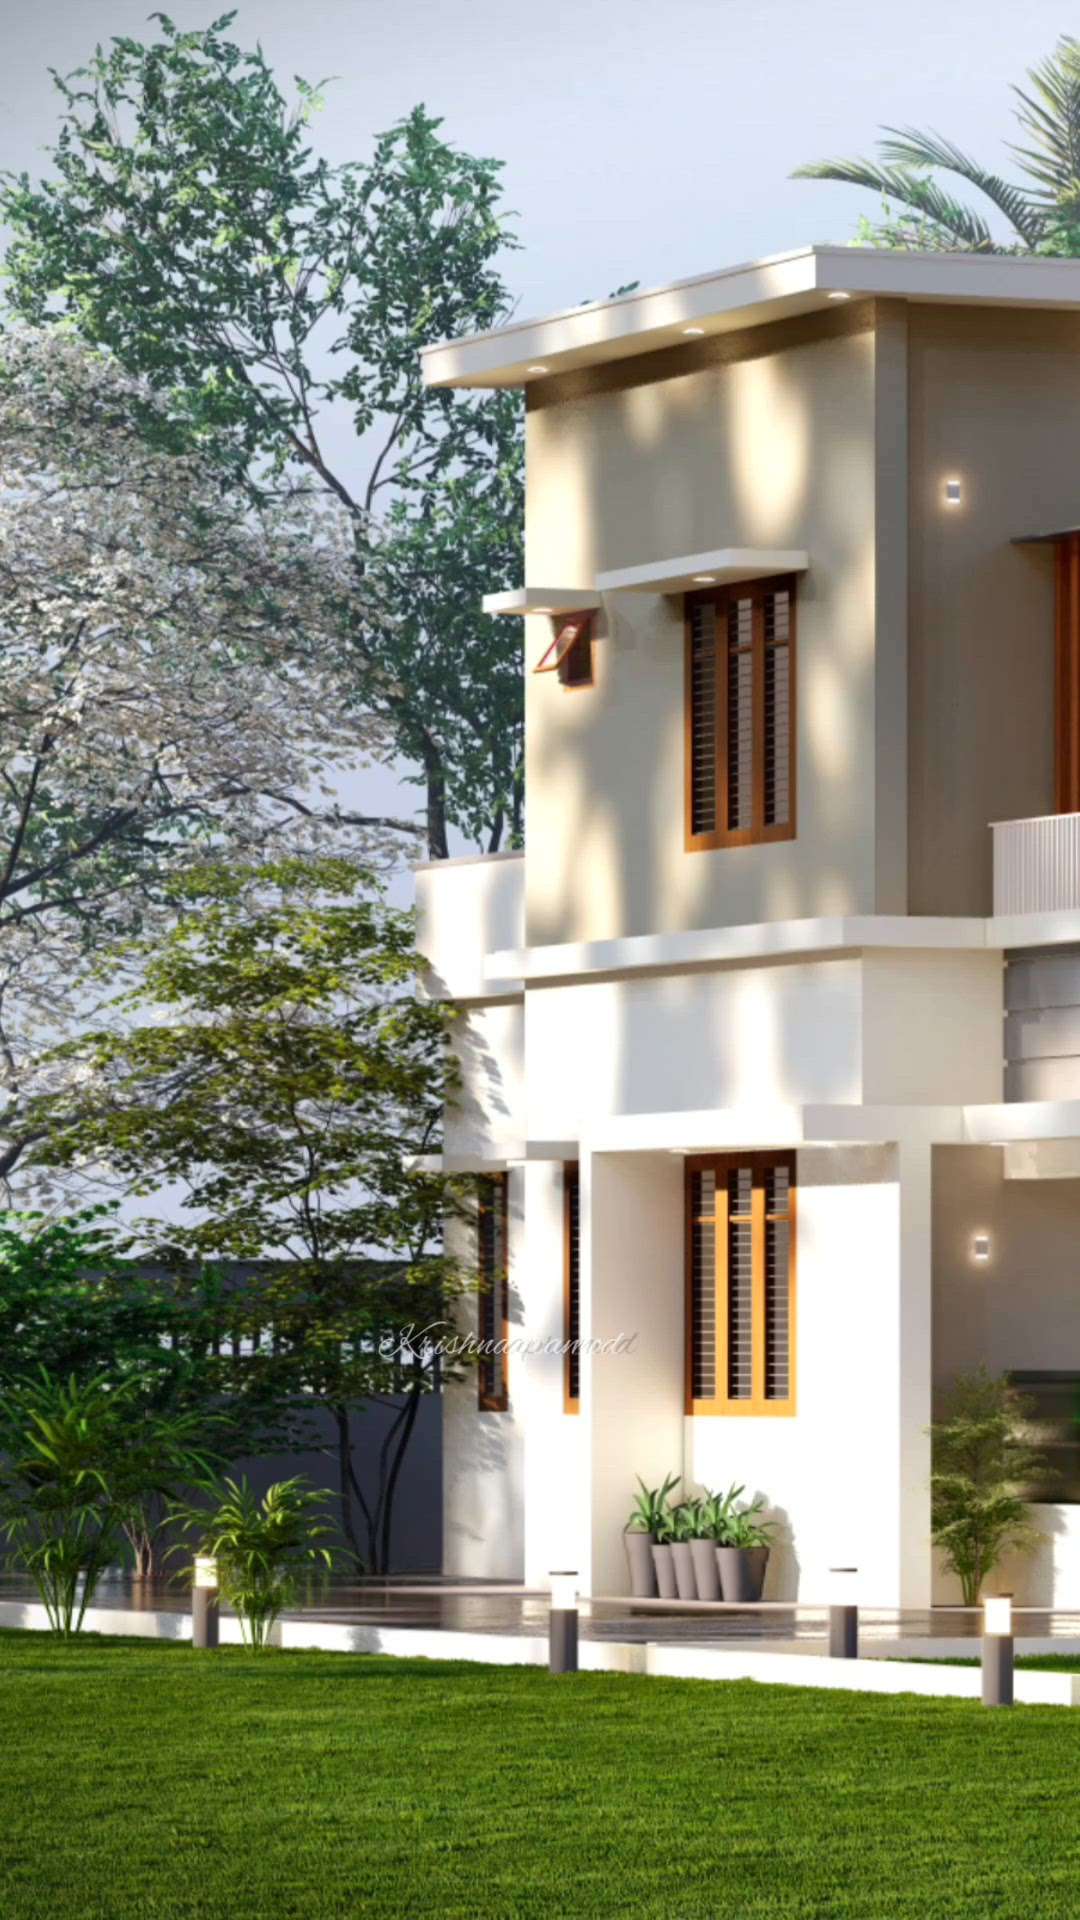 Area : 2190
4bhk
#3Dexterior #ElevationHome #3D_ELEVATION #Architect #architecturedesigns #Architectural&Interior #KeralaStyleHouse #keralaarchitecturehomes